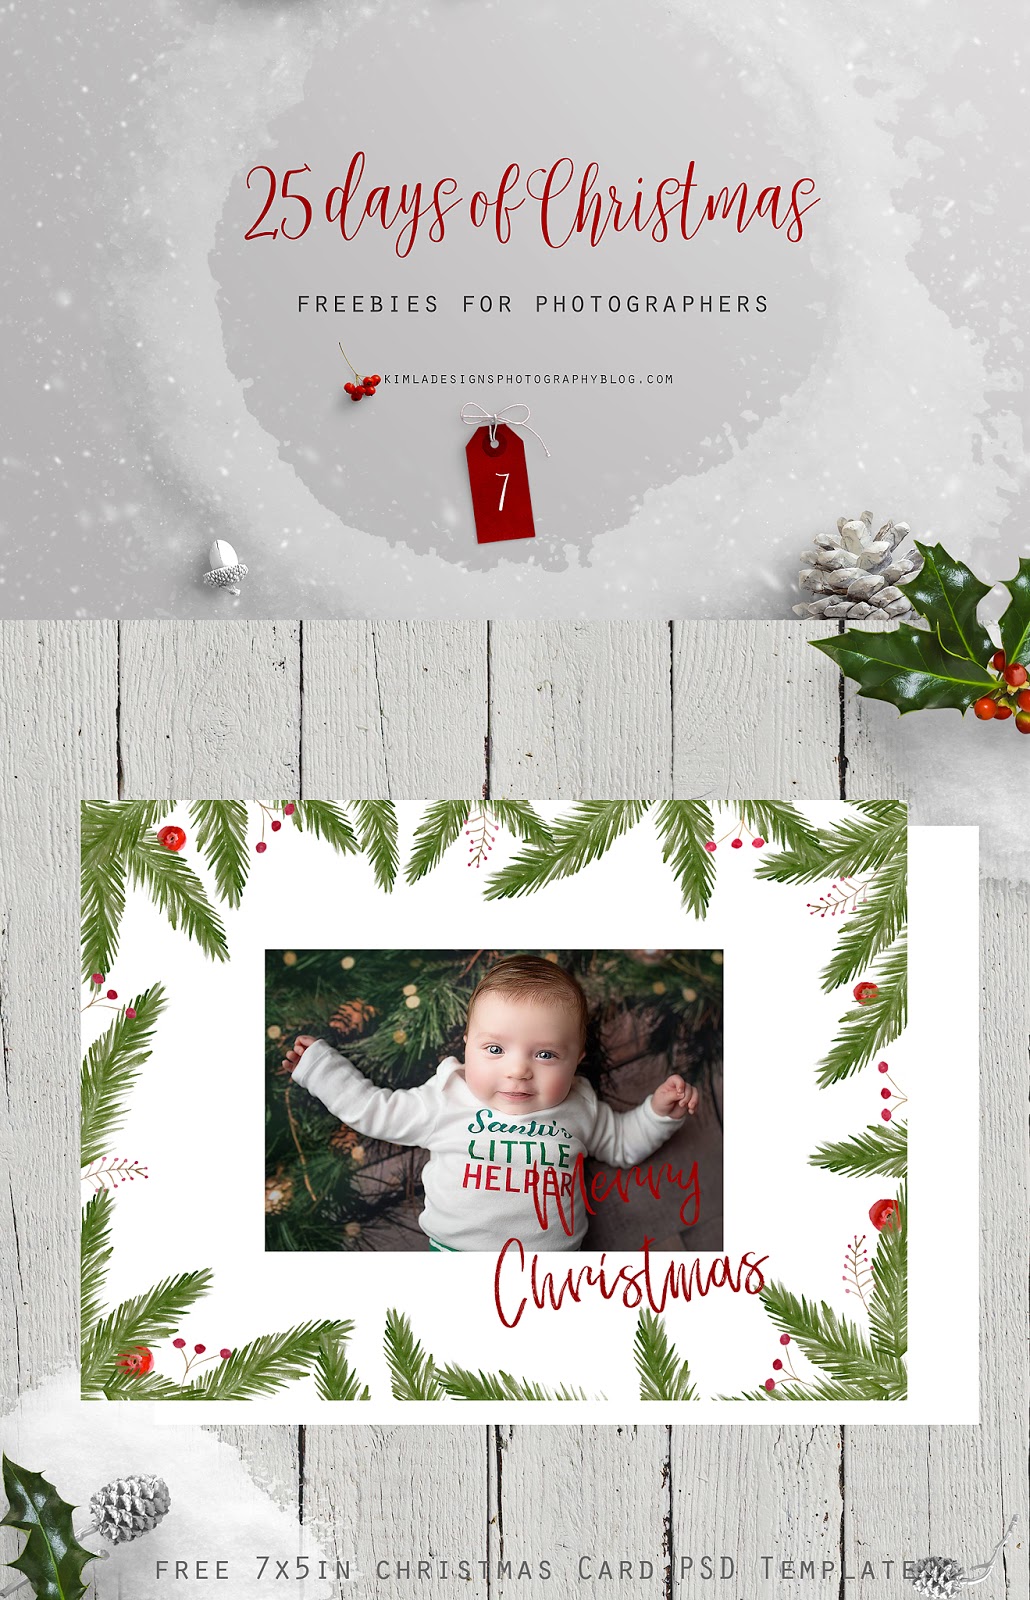 https://blogger.googleusercontent.com/img/b/R29vZ2xl/AVvXsEgzD09T_k7g0izbMR37tXHLTw9pshOpCT1HEHRpmusv6vxIBYURVq1STyiL2jvfkVzVQ6koAa22GRCrXlpf7zxzzqRzdmyUTVCv2TT2TPcrRZeWGpVWsPm3kcqG2N7YwtYRcsdIfb_vdcY/s1600/Free+Watercolor+Christmas+Card+PSD+Template+for+Photographers+by+Kimla+Designs.jpg